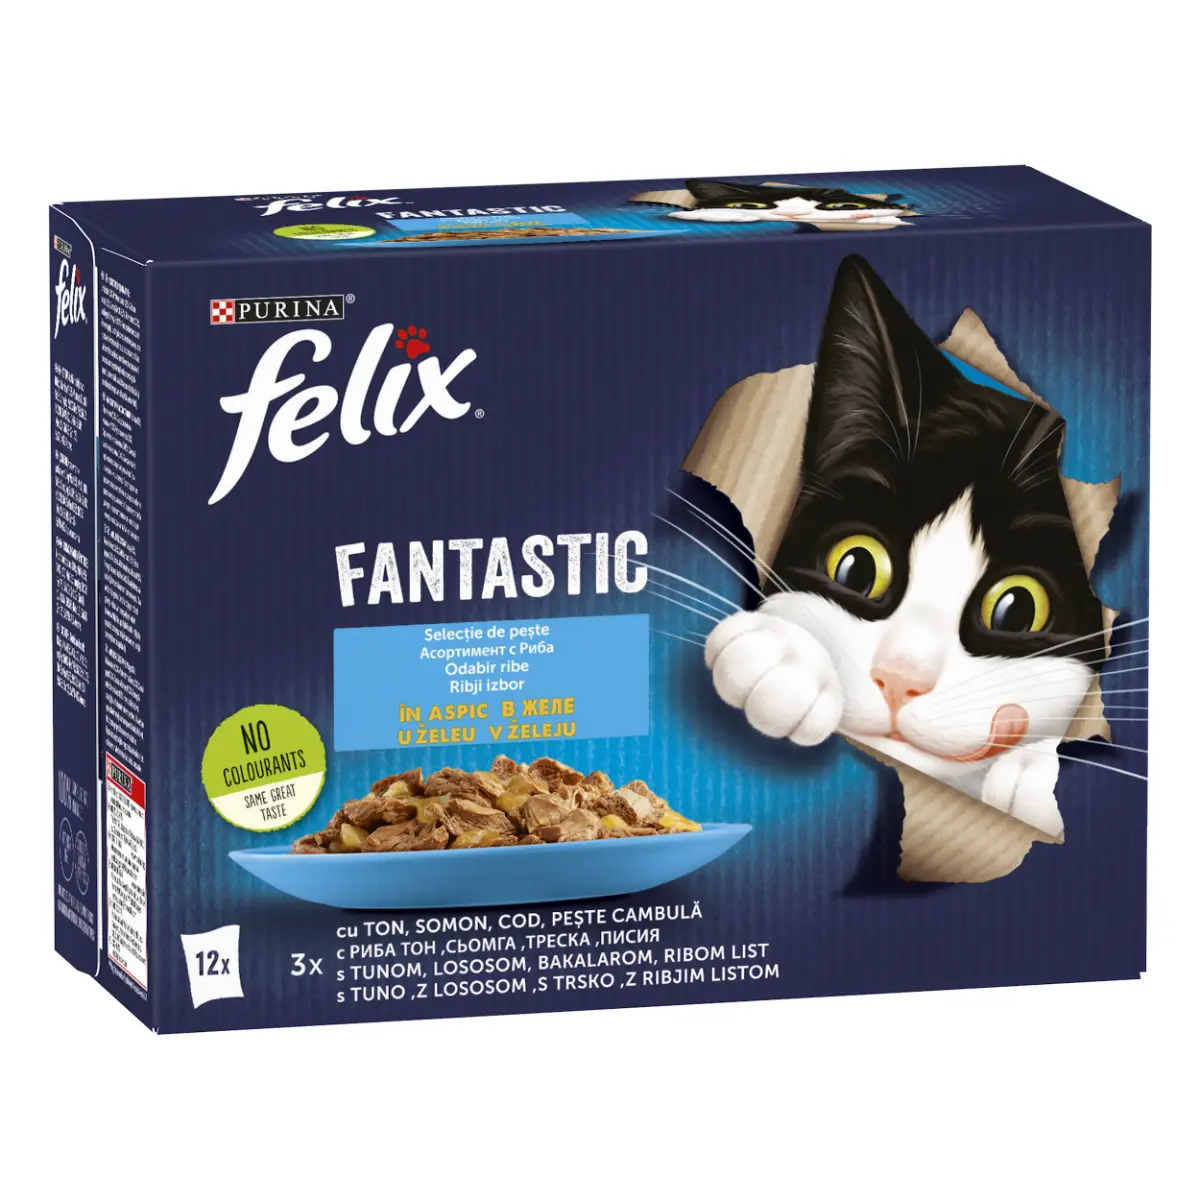 Hrana umeda pentru pisici, Felix Fantastic cu ton/somon/cod/peste in Cambula, in aspic, pachet mixat, 12x85g